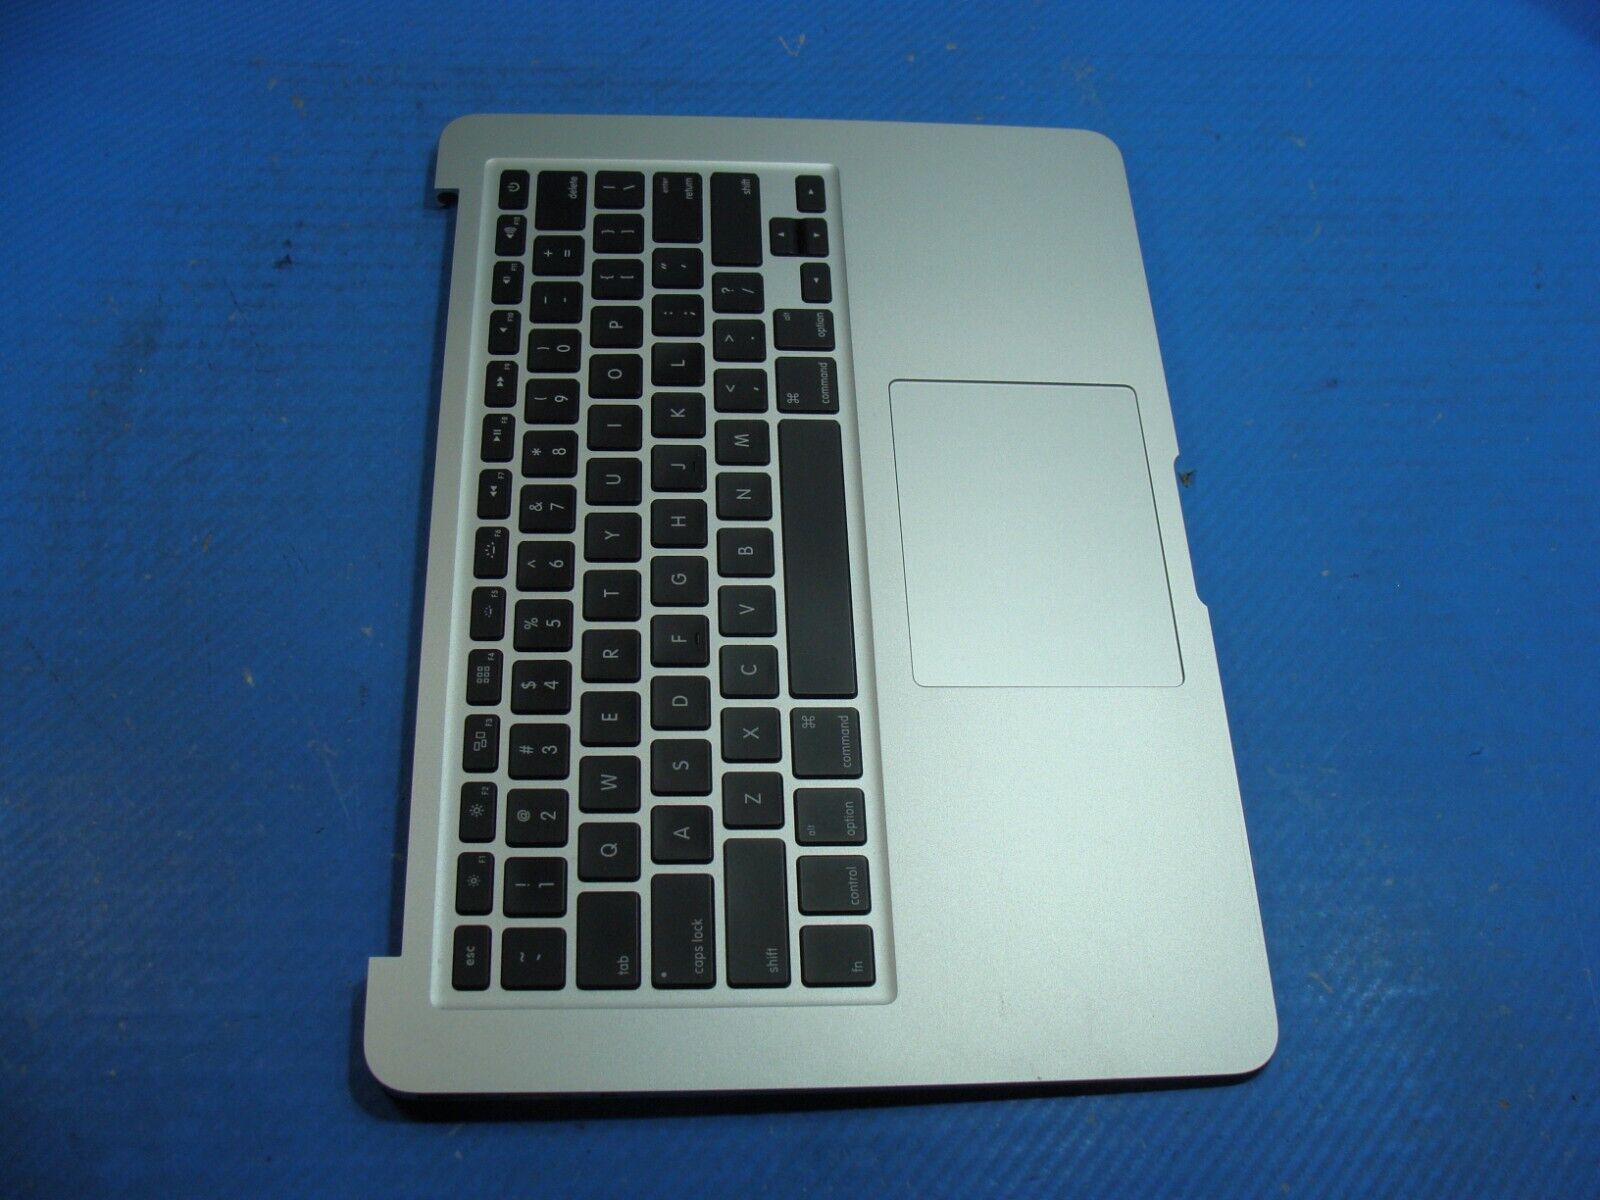 MacBook Air A1466 13 Mid 2012 MD231LL/A Top Case w/Keyboard Trackpad 661-6635